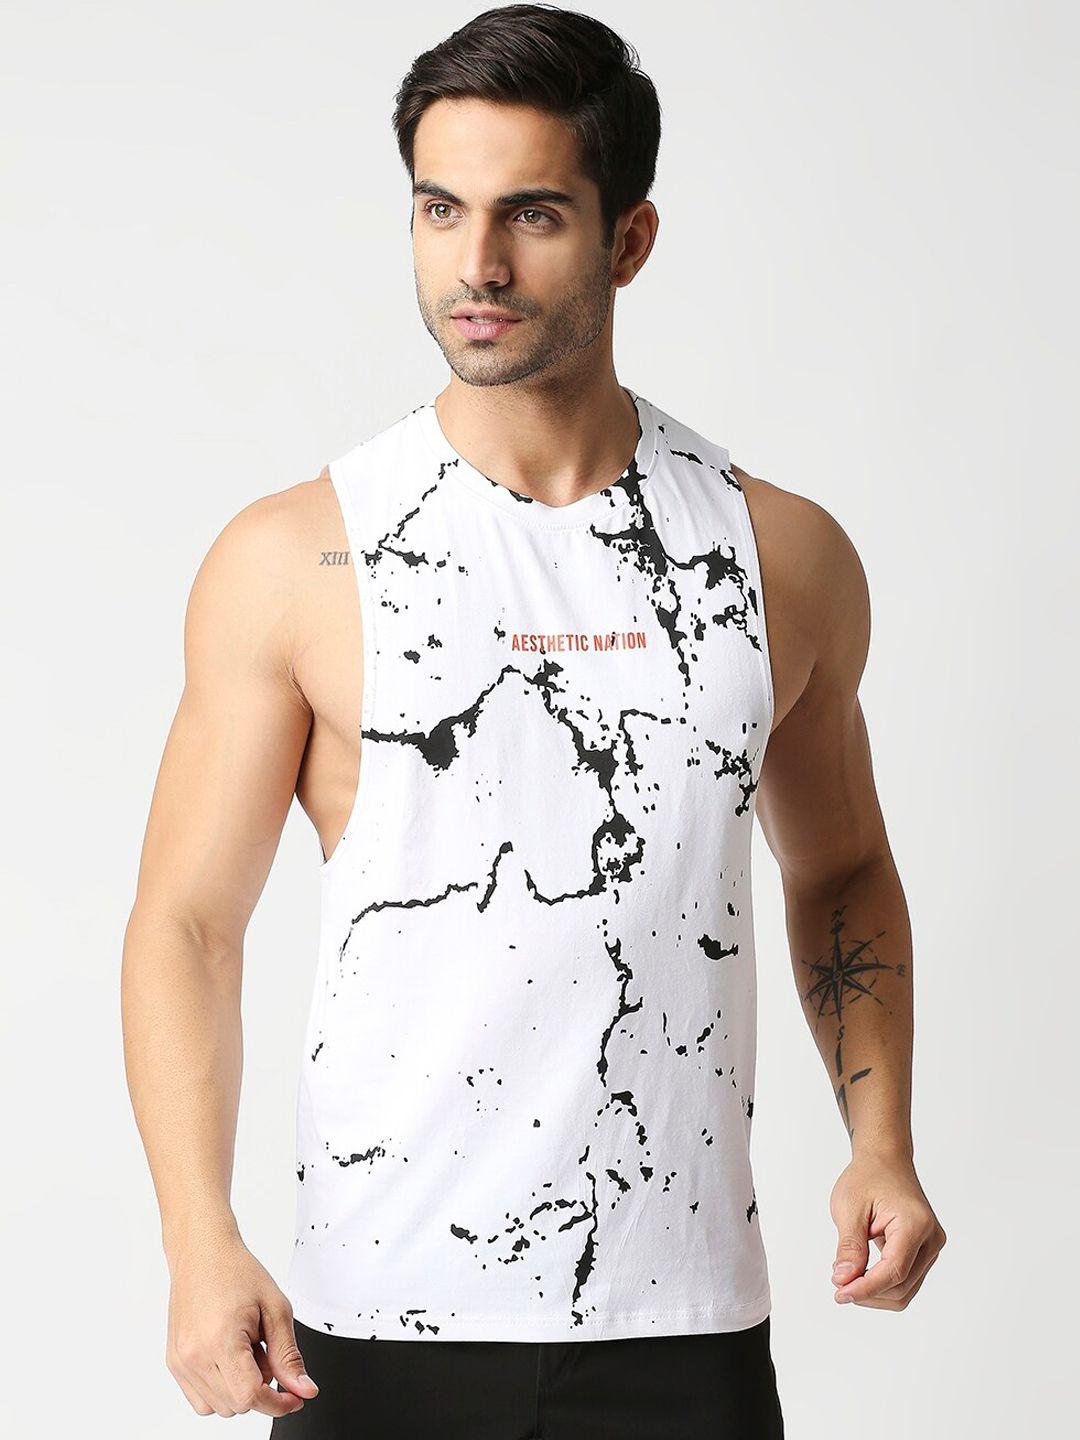 aesthetic nation men white & black printed cotton innerwear gym vests